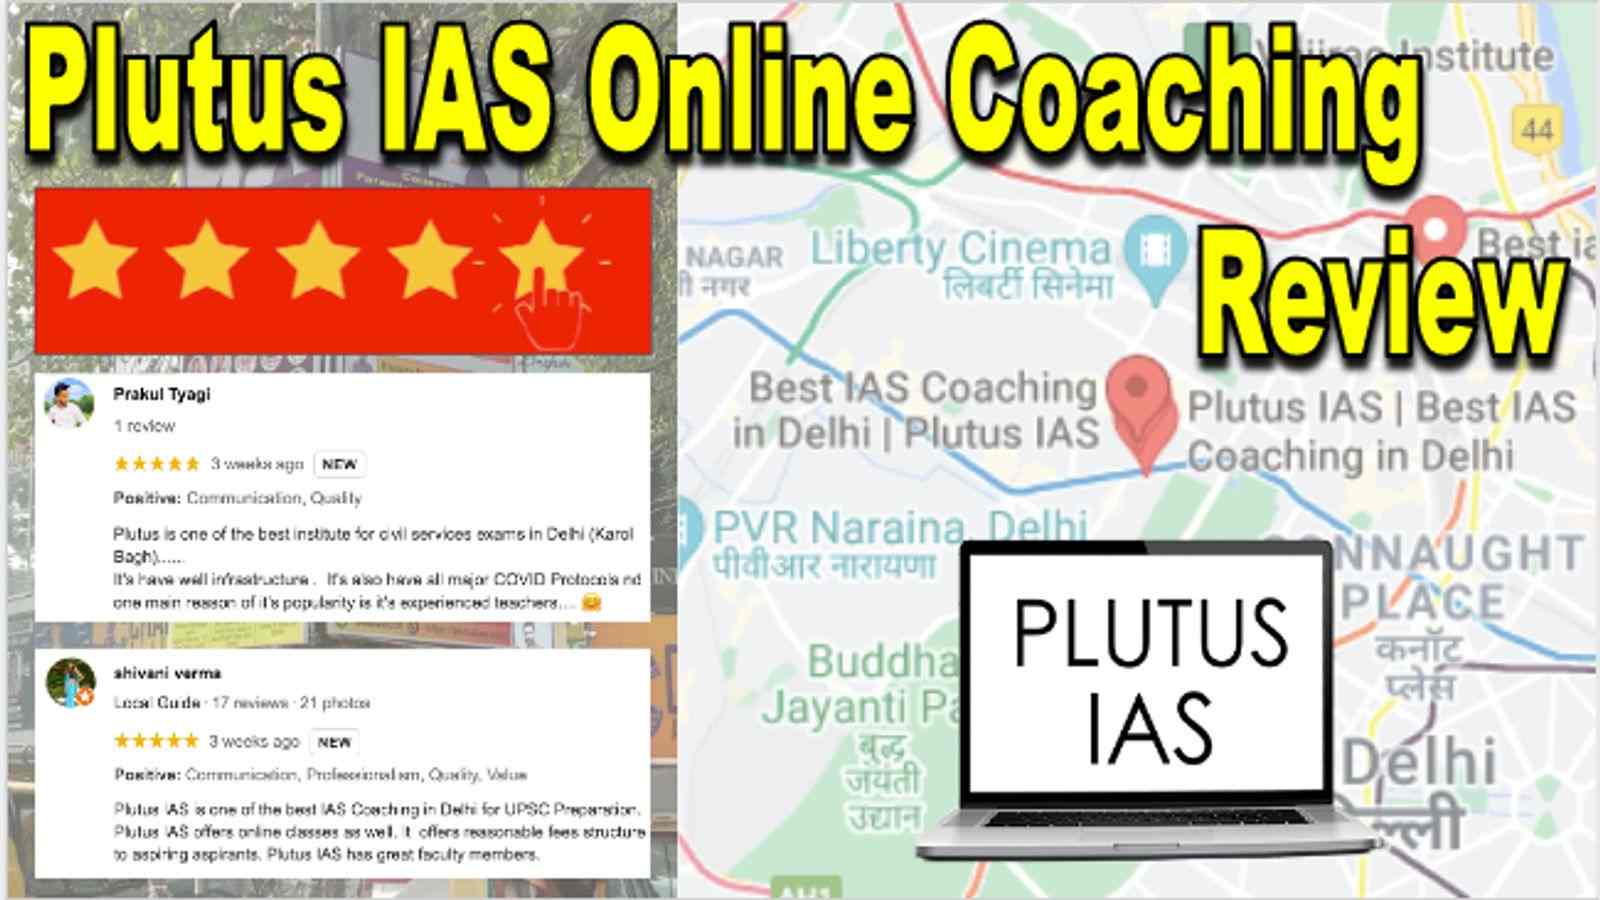 Plutus IAS Online Coaching Review